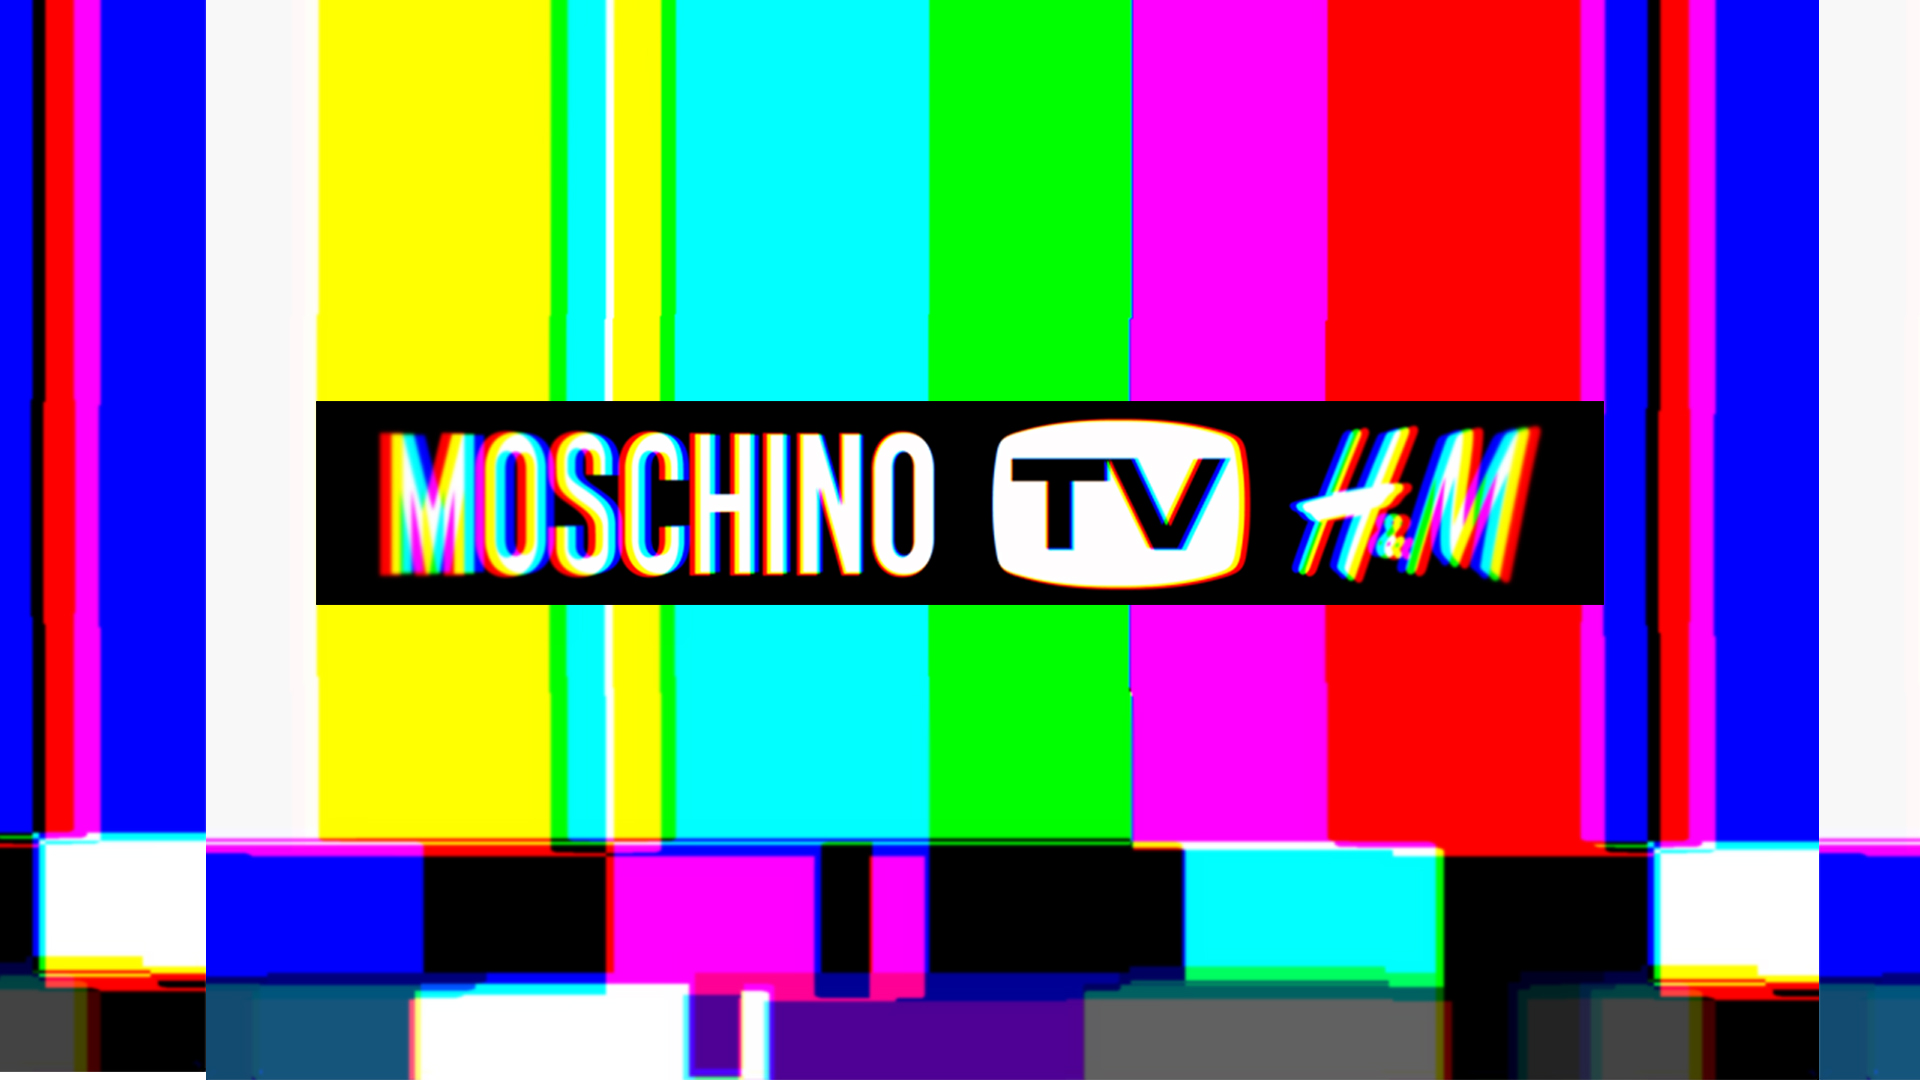 MOSCHINO[tv]H&M_Announcement_logo_1920x1080.jpg